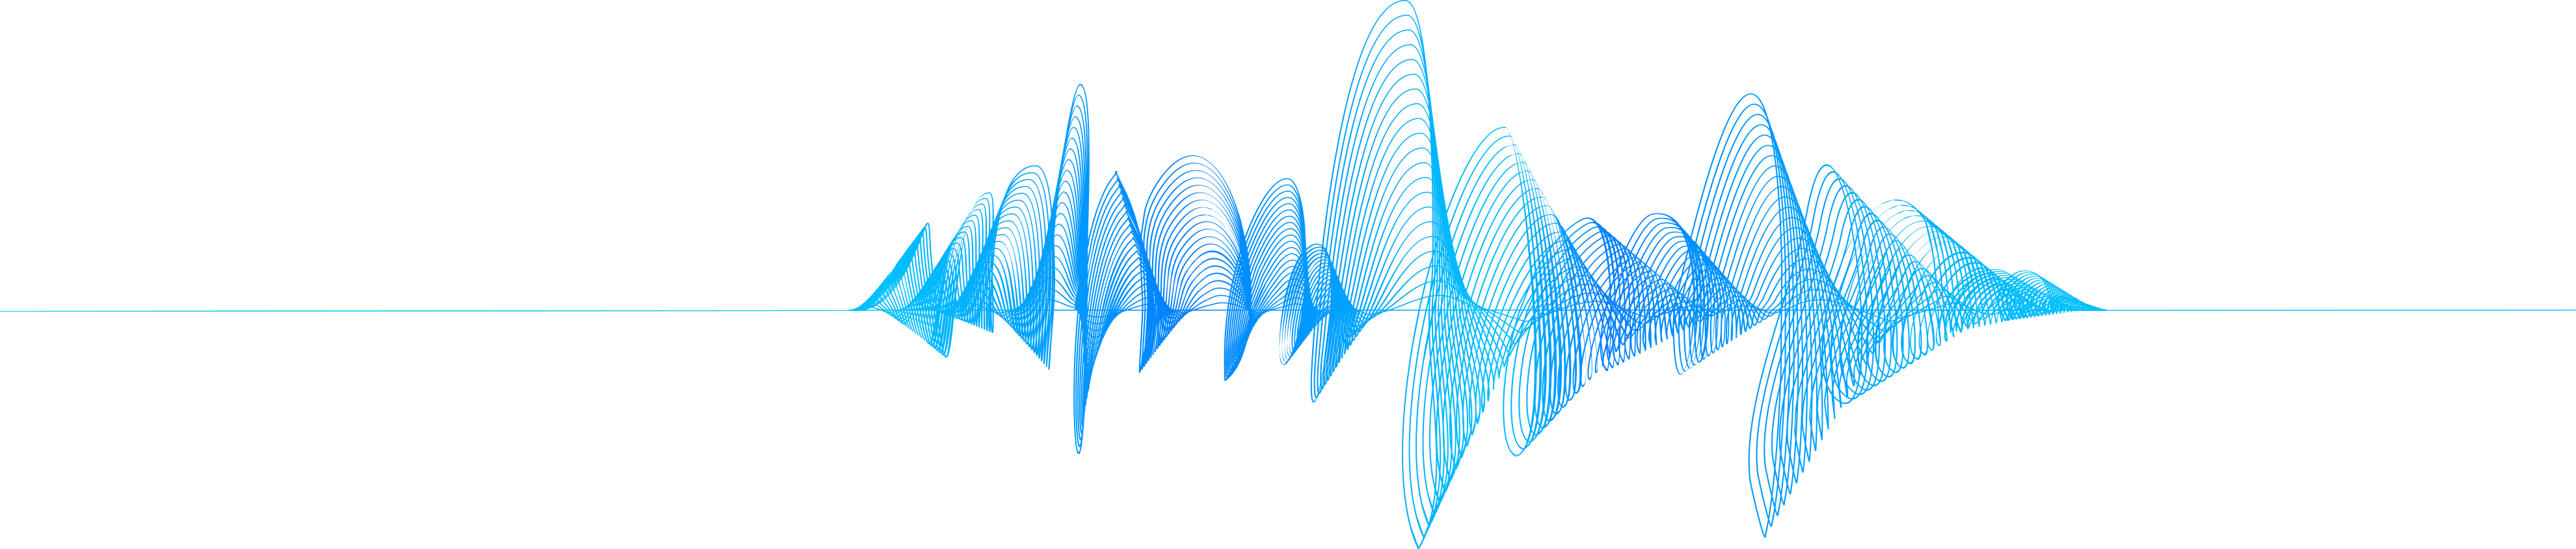 A Blue Sound Waves On A Black Background